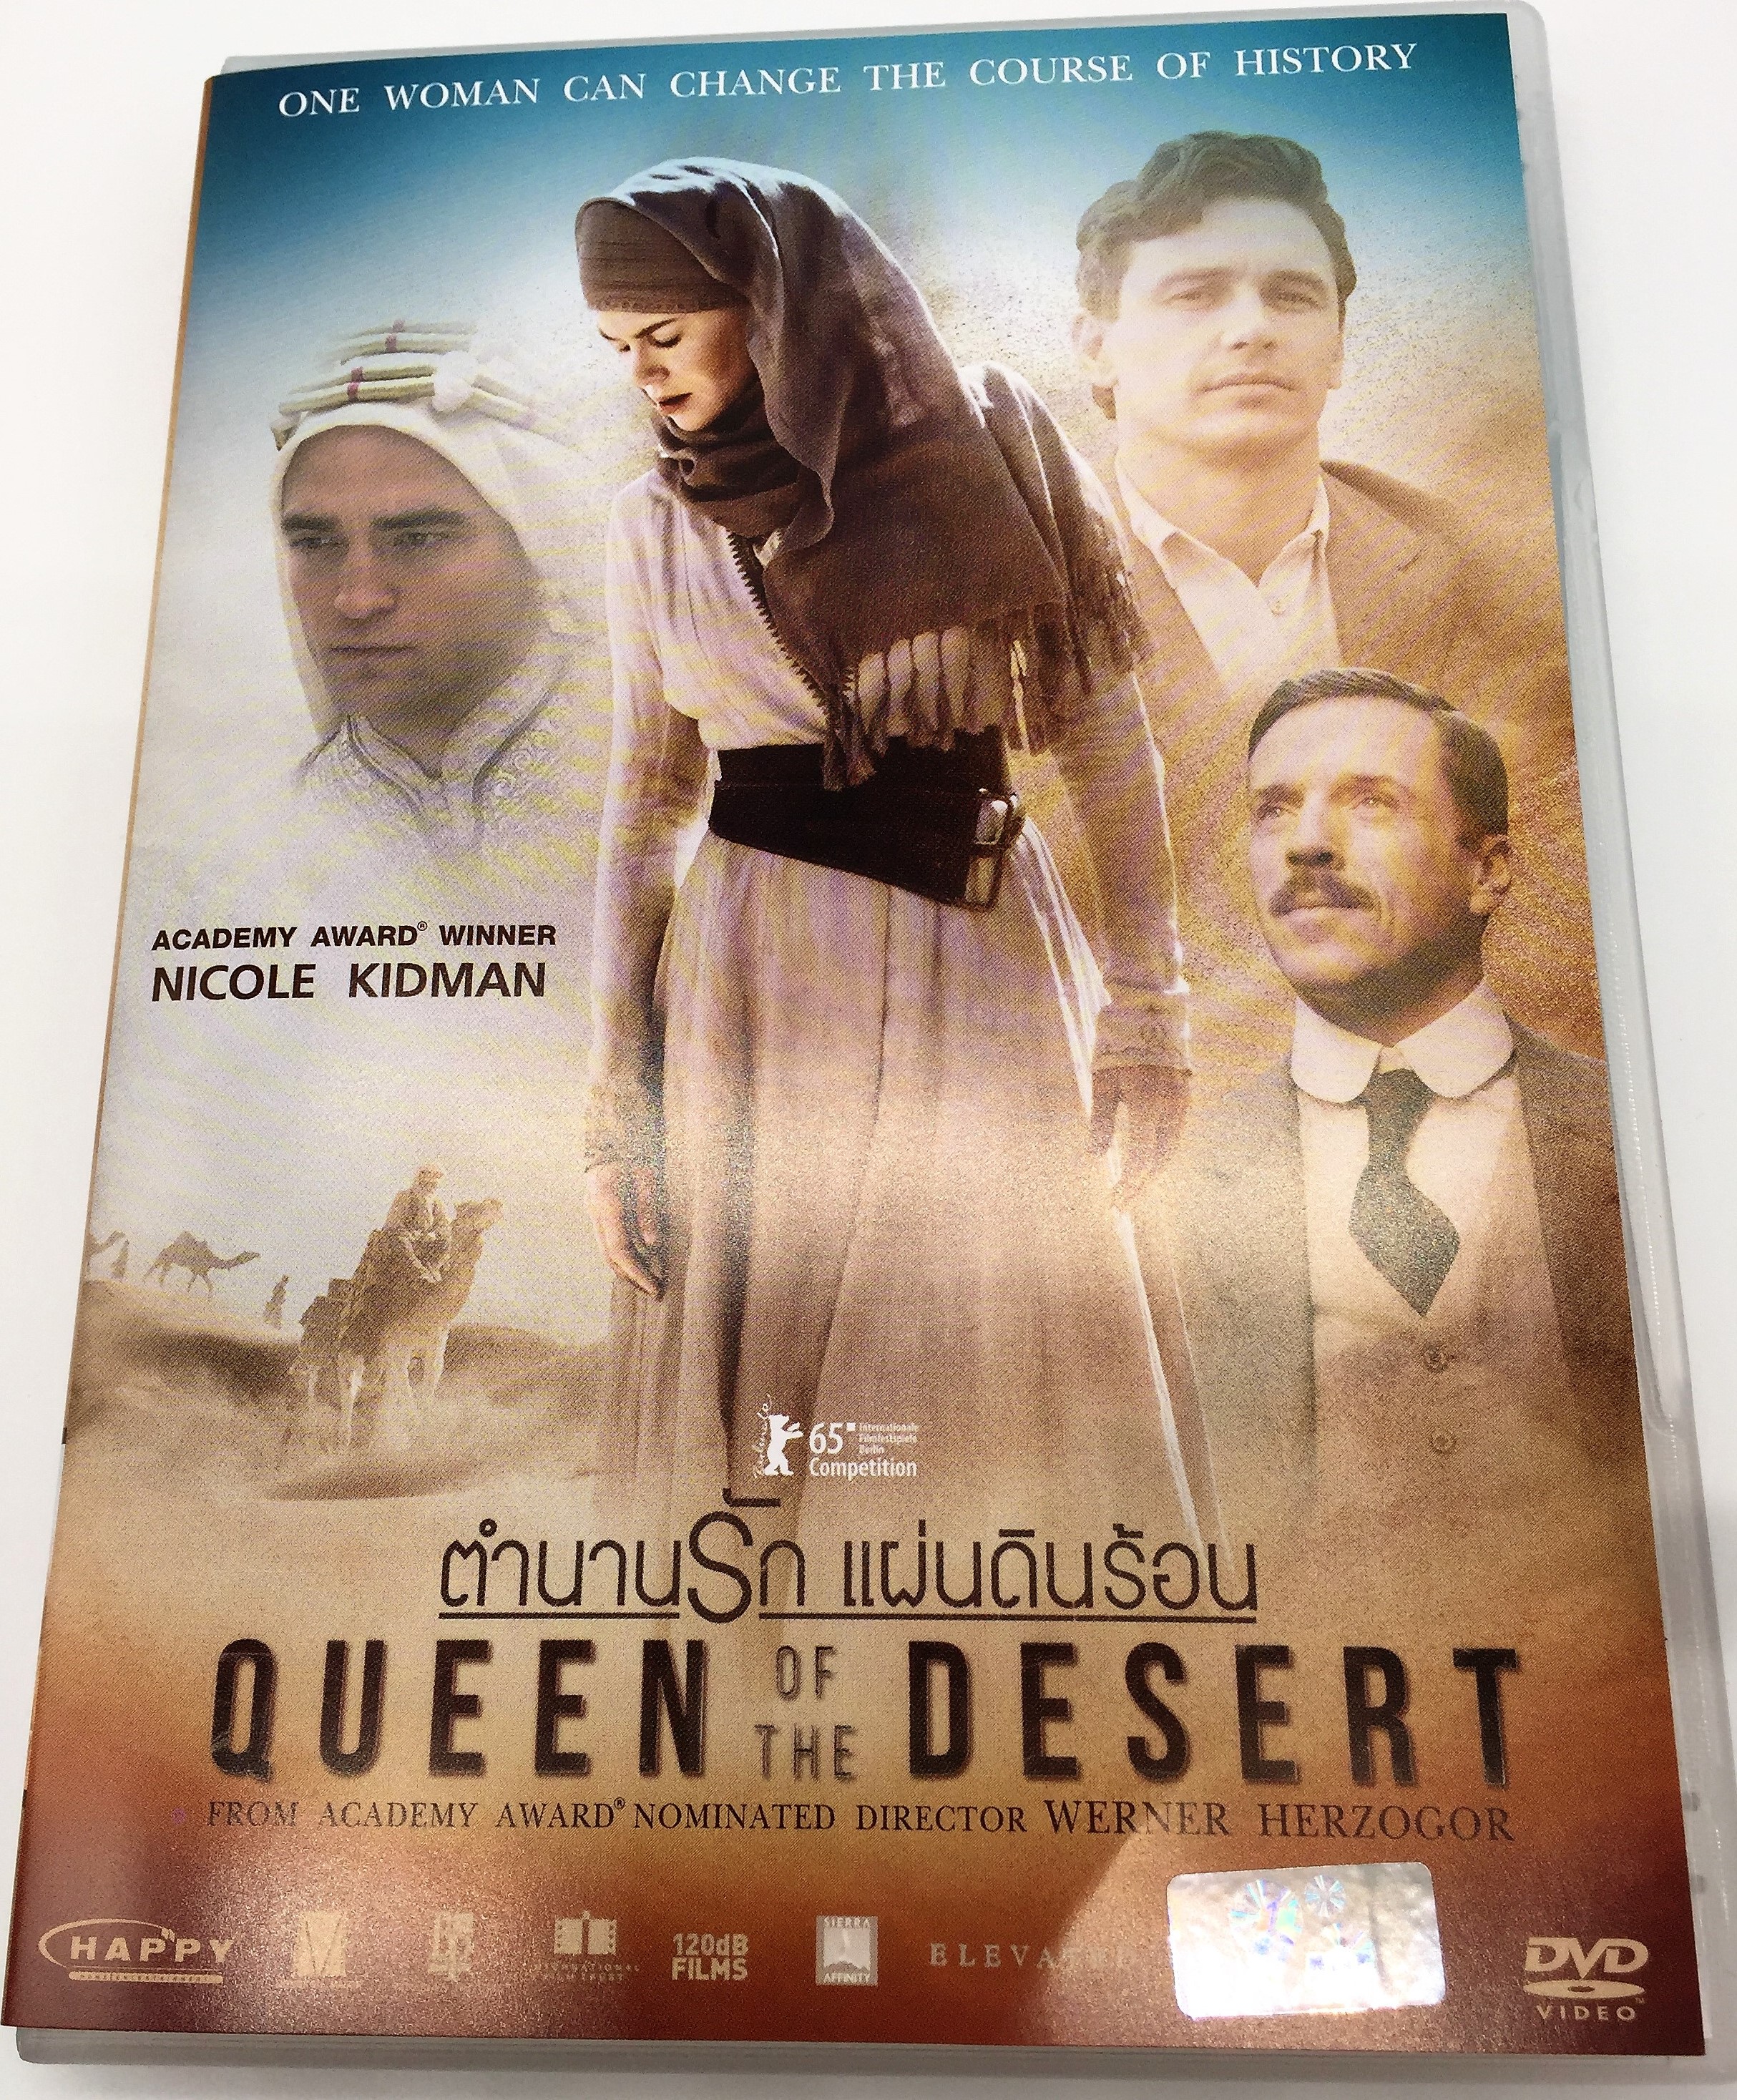 Queen of the desert DVD 2015 / Directed by Werner Herzog / Starring: Nicole  Kidman, James Franco, Damian Lewis, Jay Abdo - bibleinmylanguage